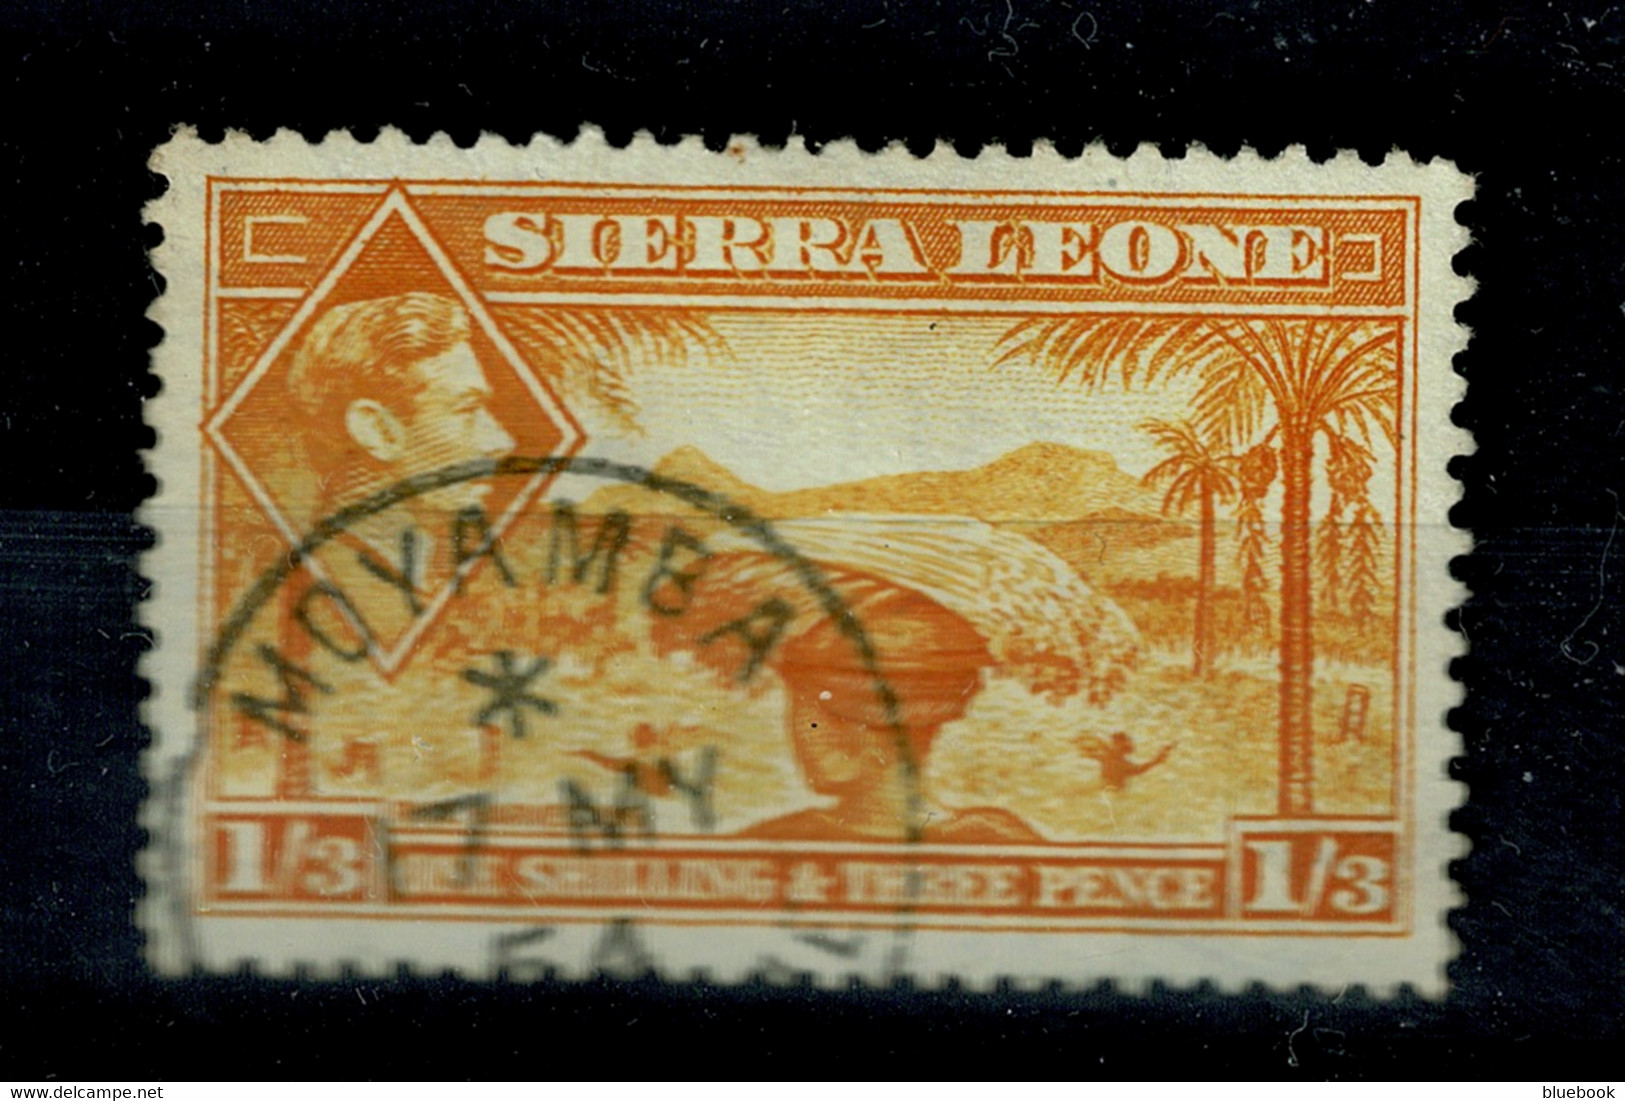 Ref 1585 - Sierra Leone 1944 - 1s3d Orange Fine Used Stamp With Moyamba Postmark For 1954 - Sierra Leone (...-1960)